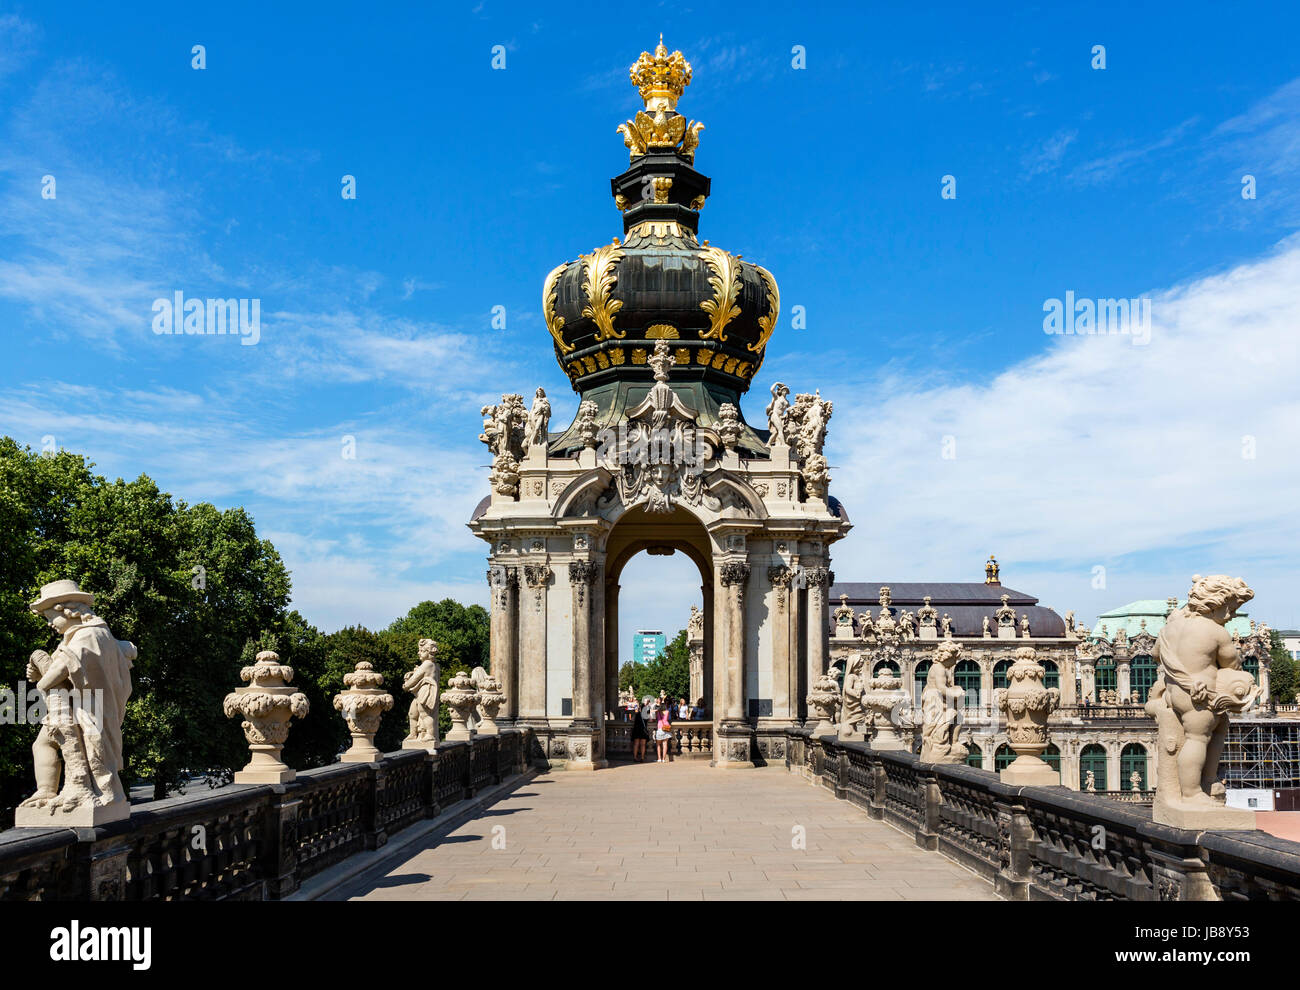 The Zwinger palace, Dresden, Saxony, Germany Stock Photo